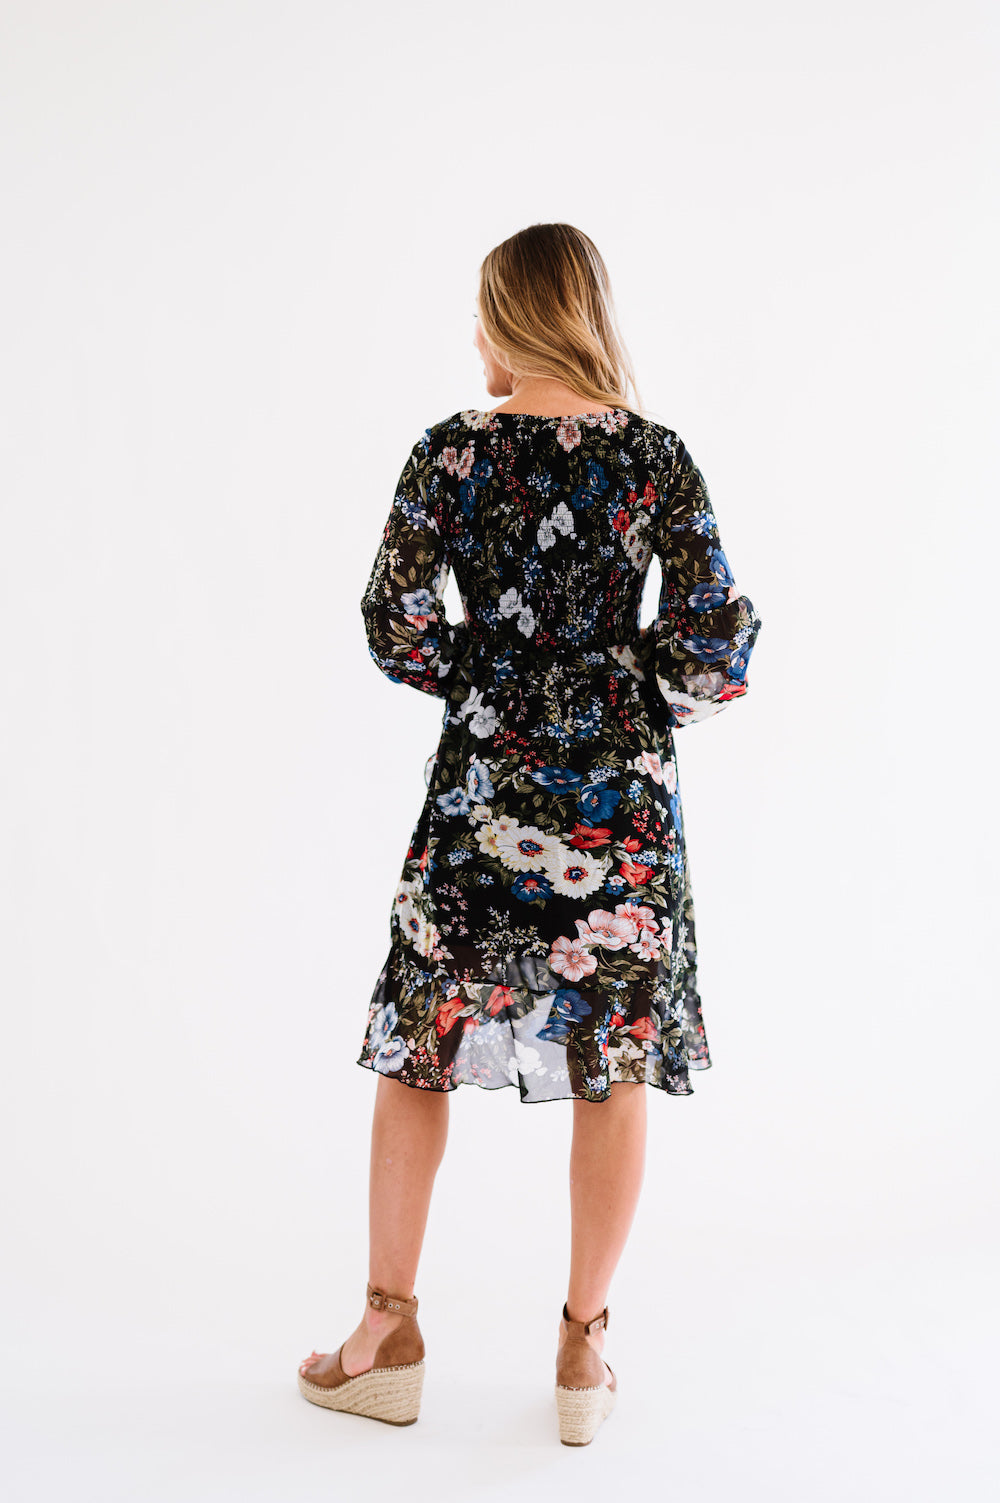 Black knee length dress with floral print